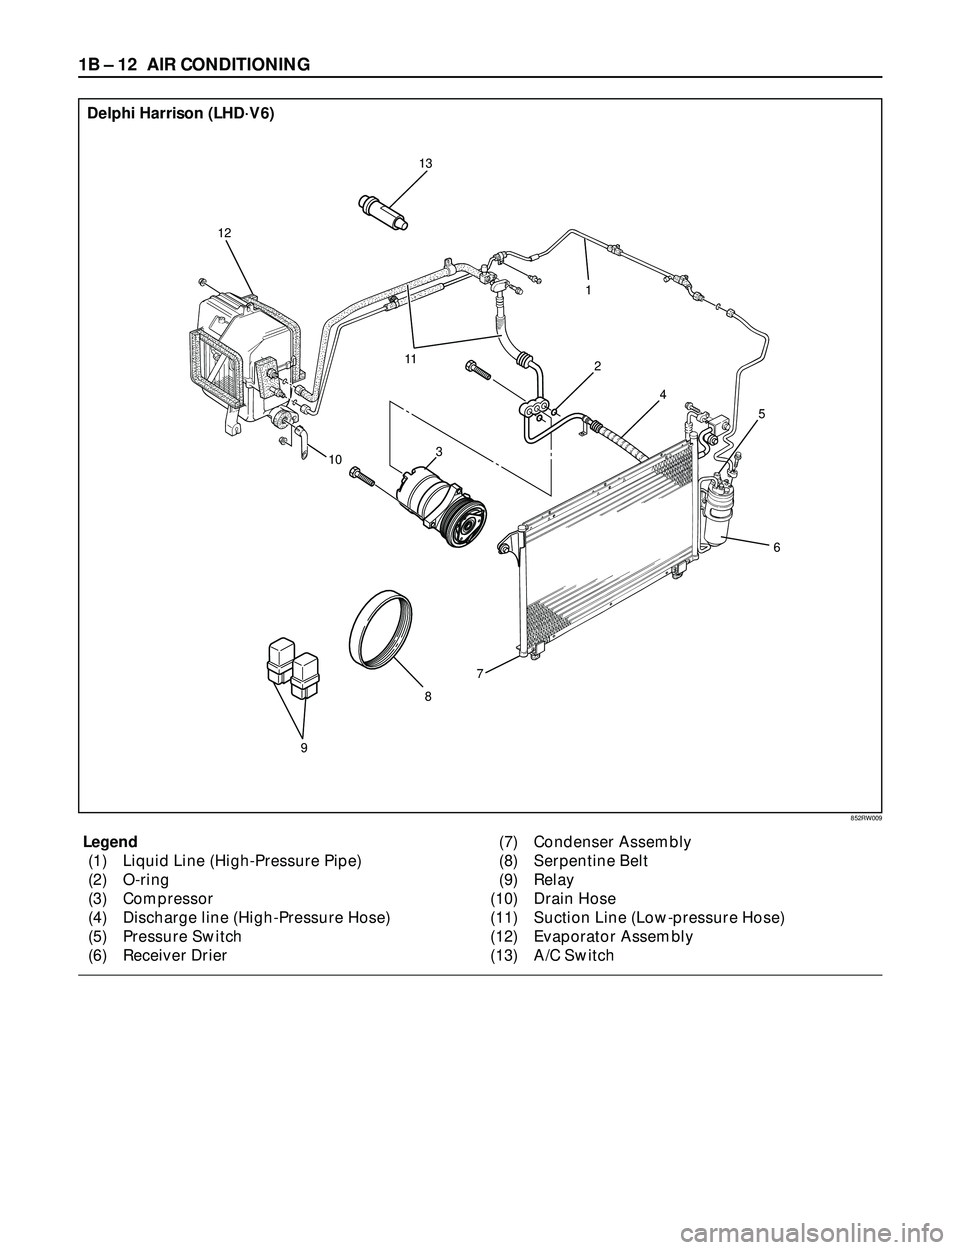 ISUZU TROOPER 1998  Service Repair Manual 1B Ð 12 AIR CONDITIONING
Legend
(1) Liquid Line (High-Pressure Pipe)
(2) O-ring
(3) Compressor
(4) Discharge line (High-Pressure Hose)
(5) Pressure Switch
(6) Receiver Drier(7) Condenser Assembly
(8)